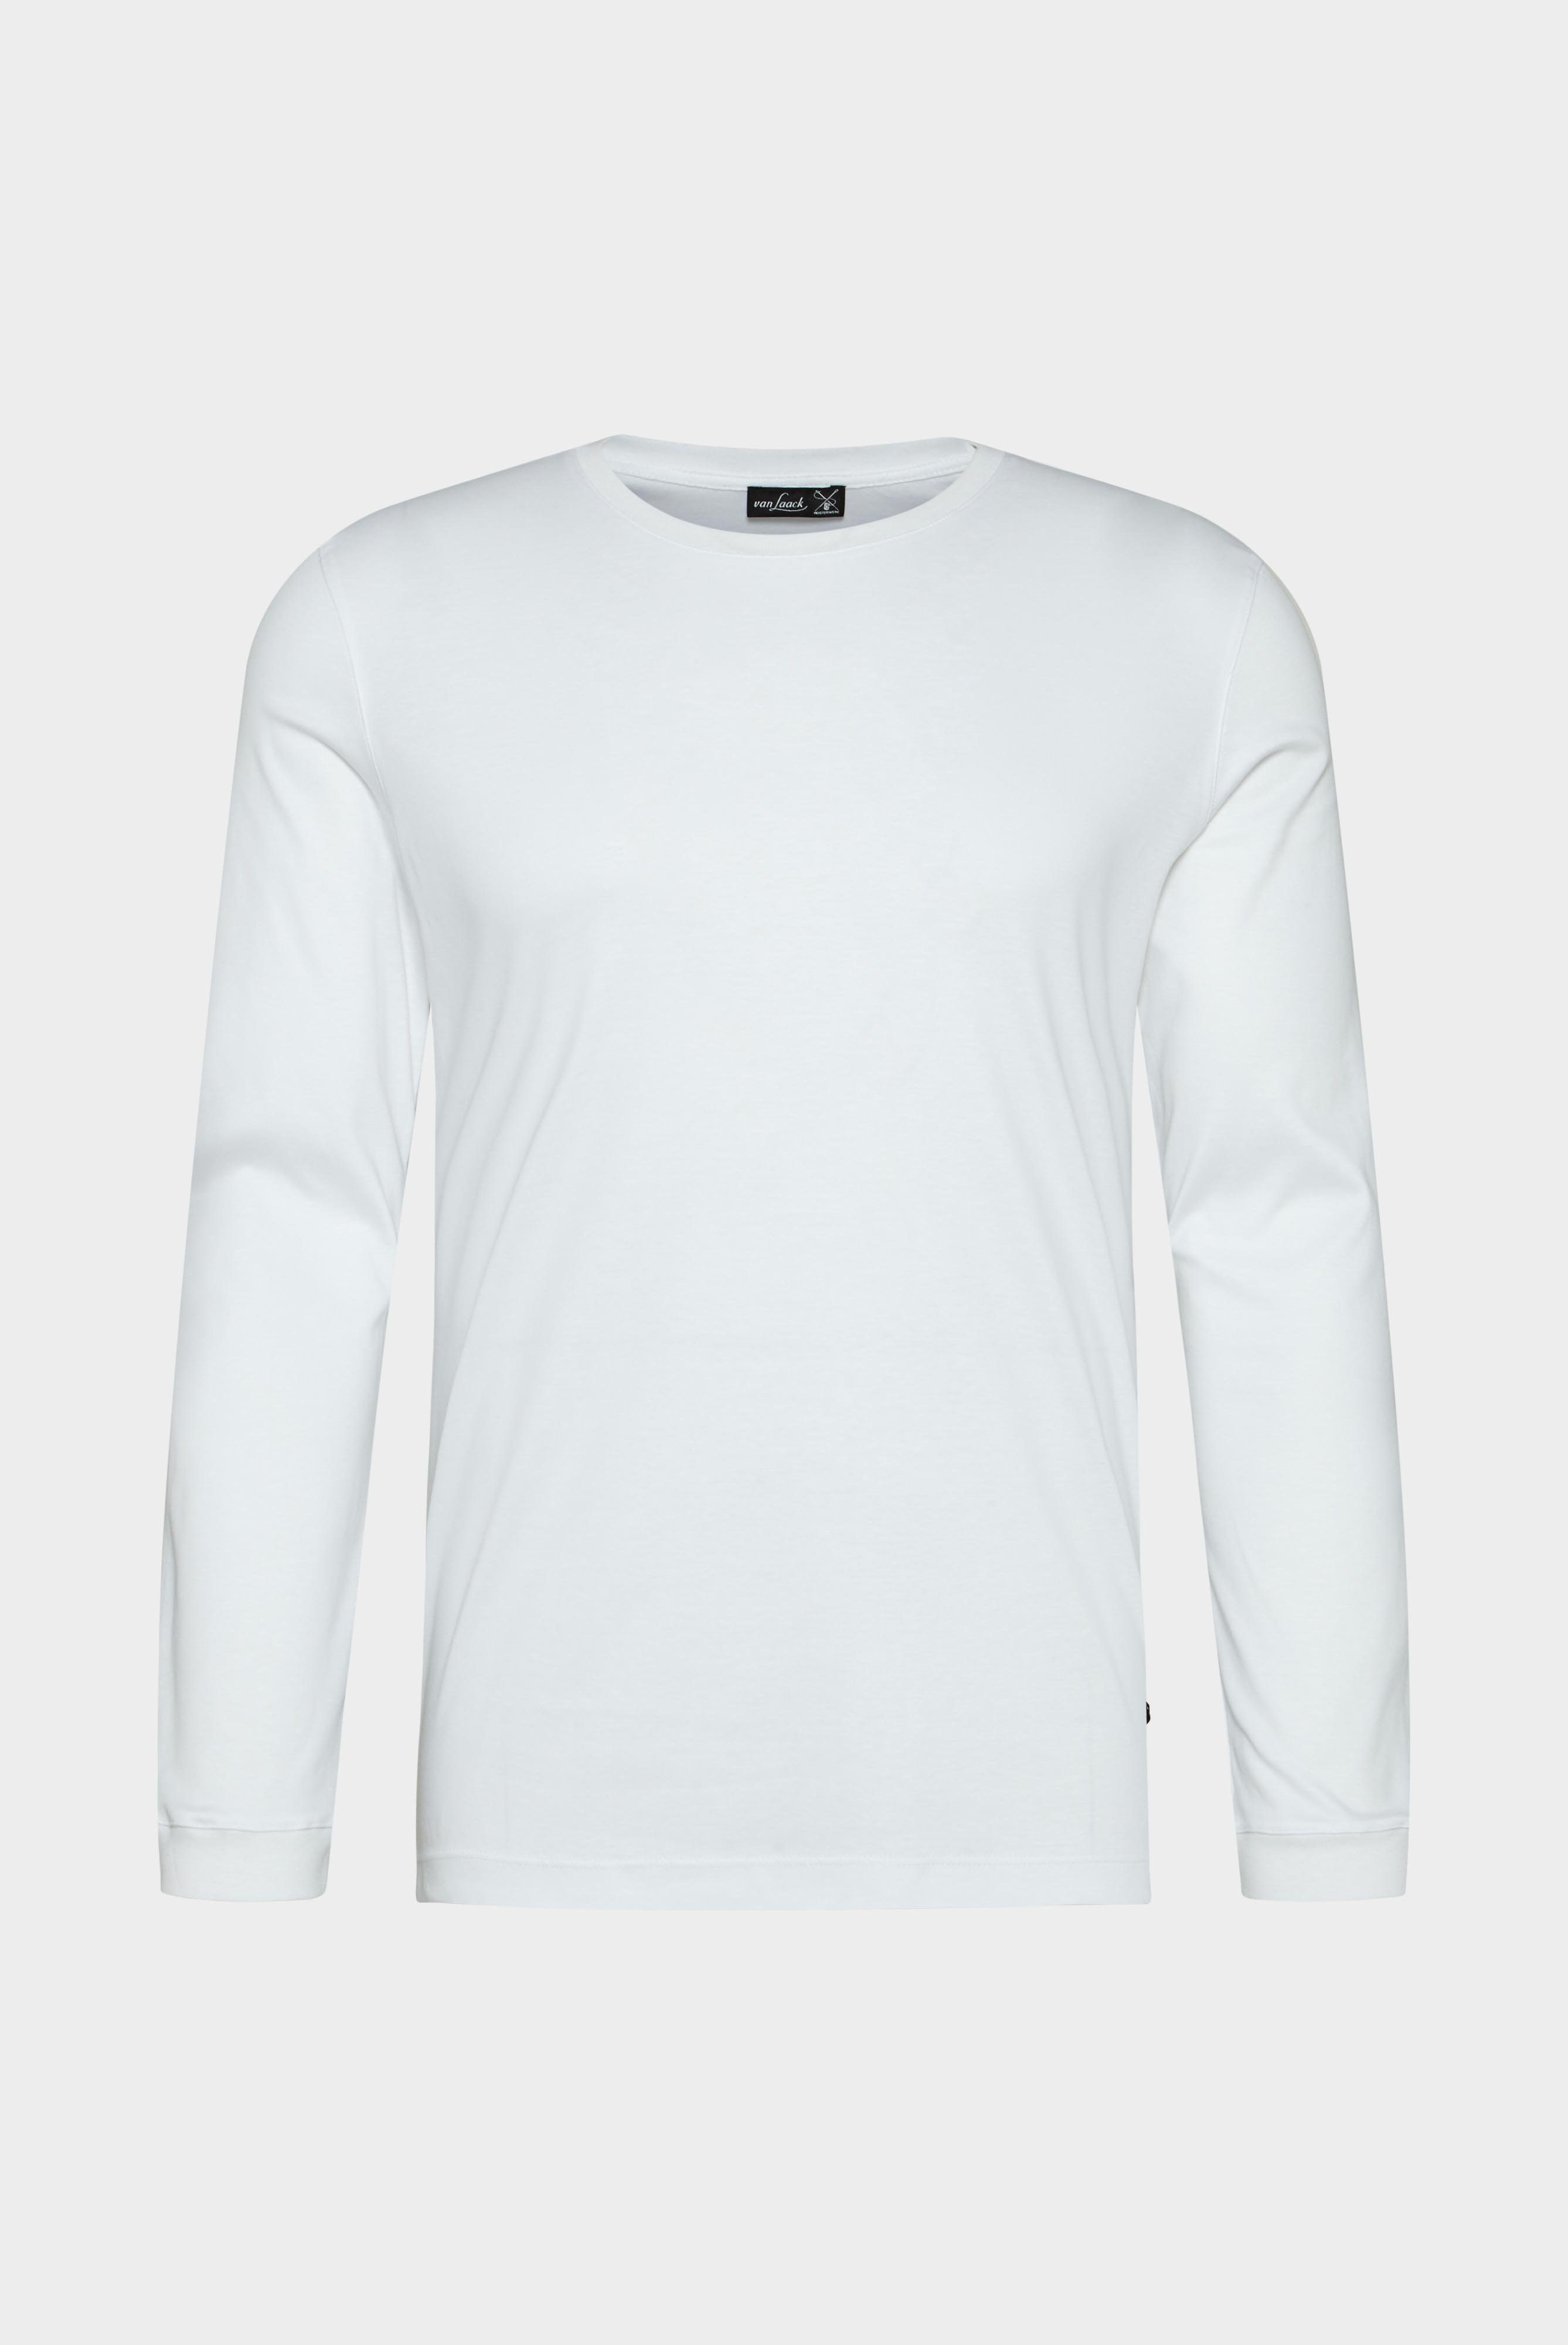 T-Shirts+Langarm Jersey T-Shirt mit Rundhals Slim Fit+20.1718.UX.180031.000.L